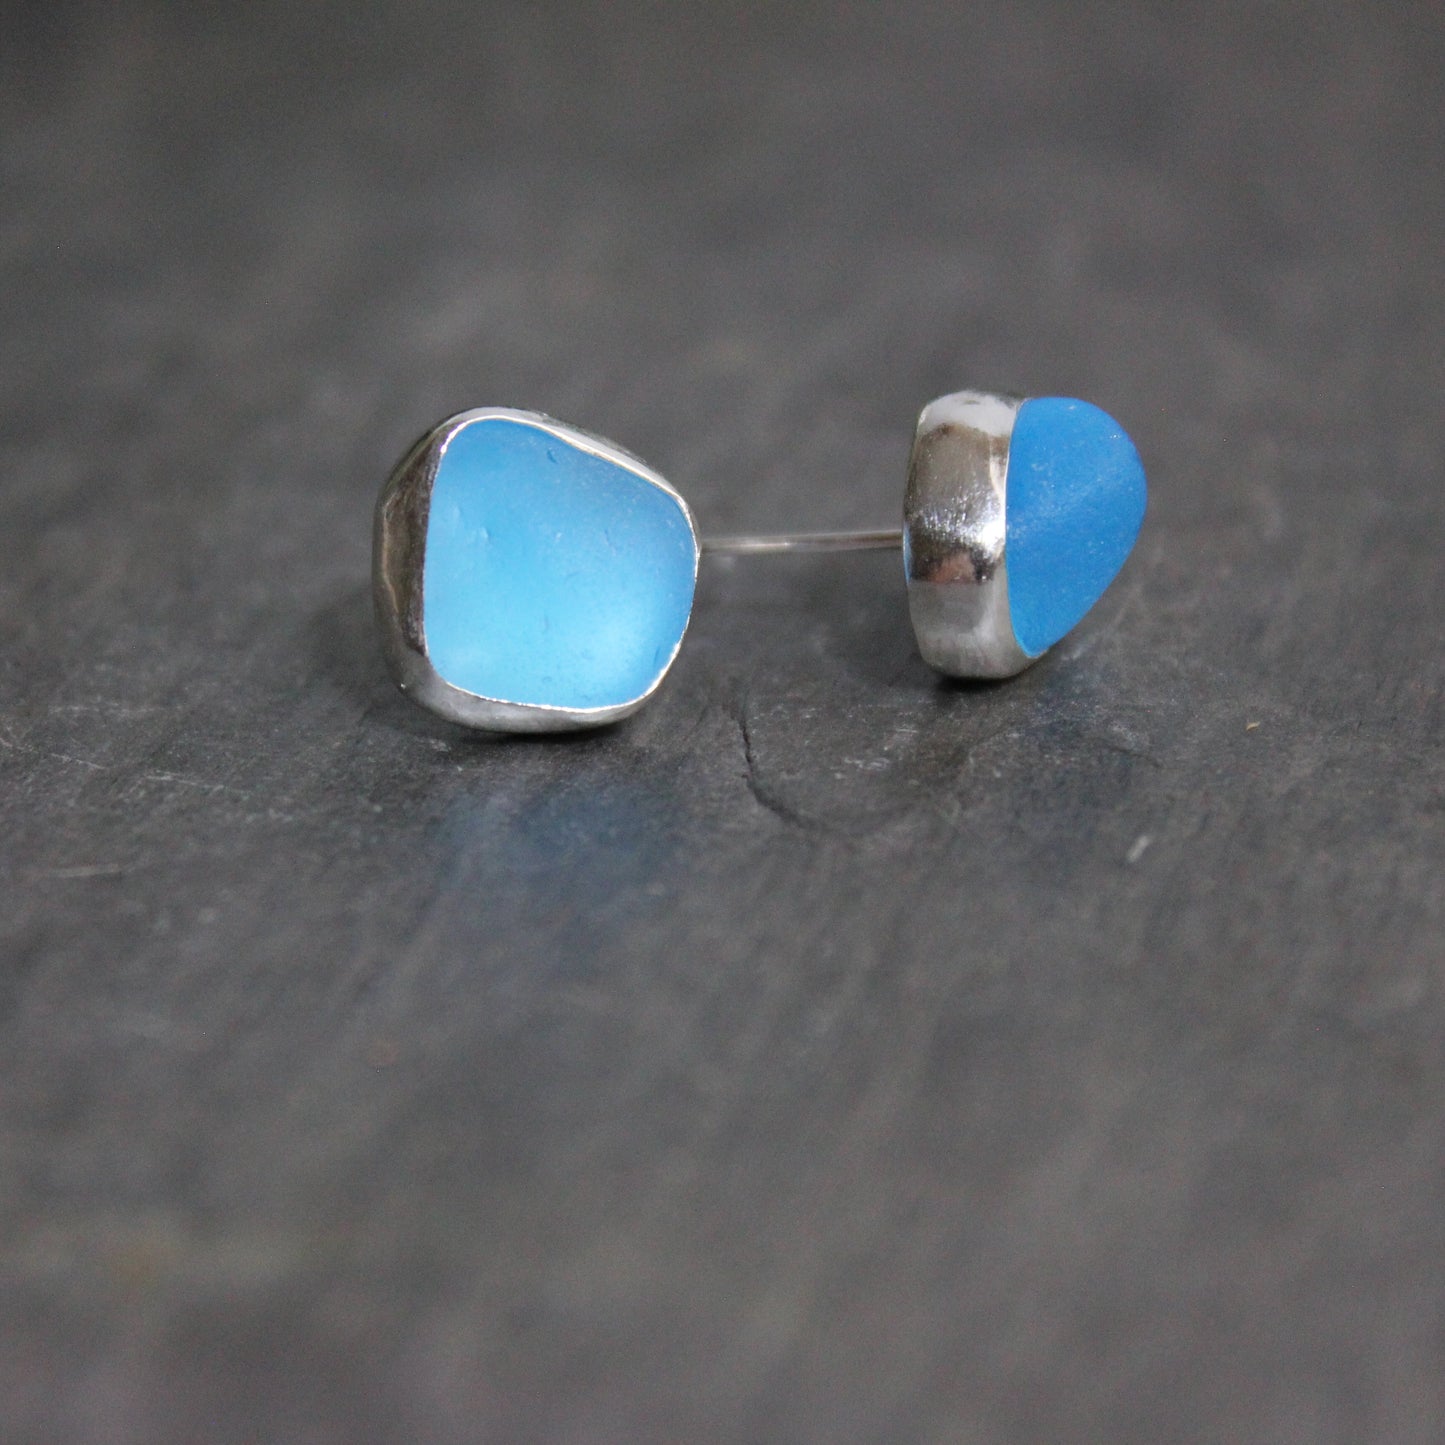 Turquoise Blue Sea Glass Earrings